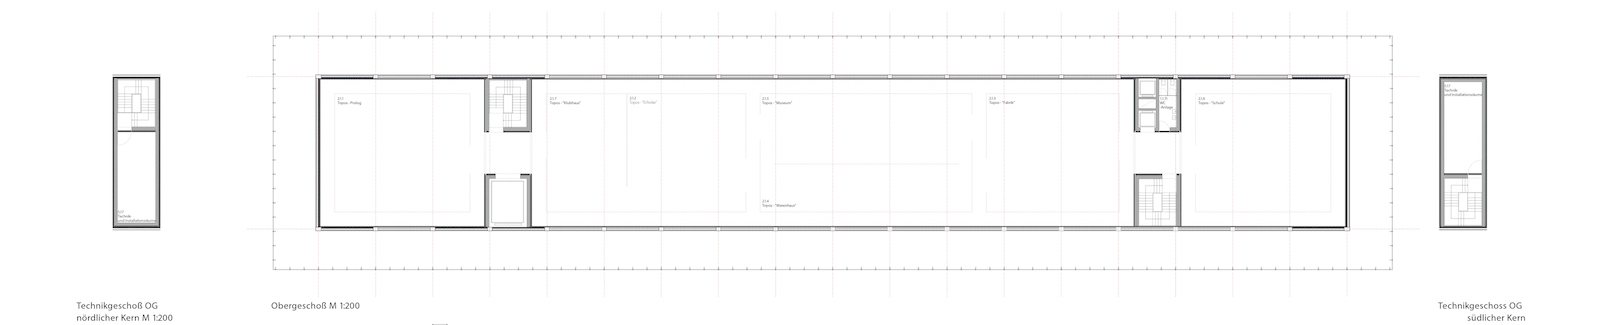 A study in contrasts 1: the first floor gallery plan of the Gonzalez Hinz Zabala design.